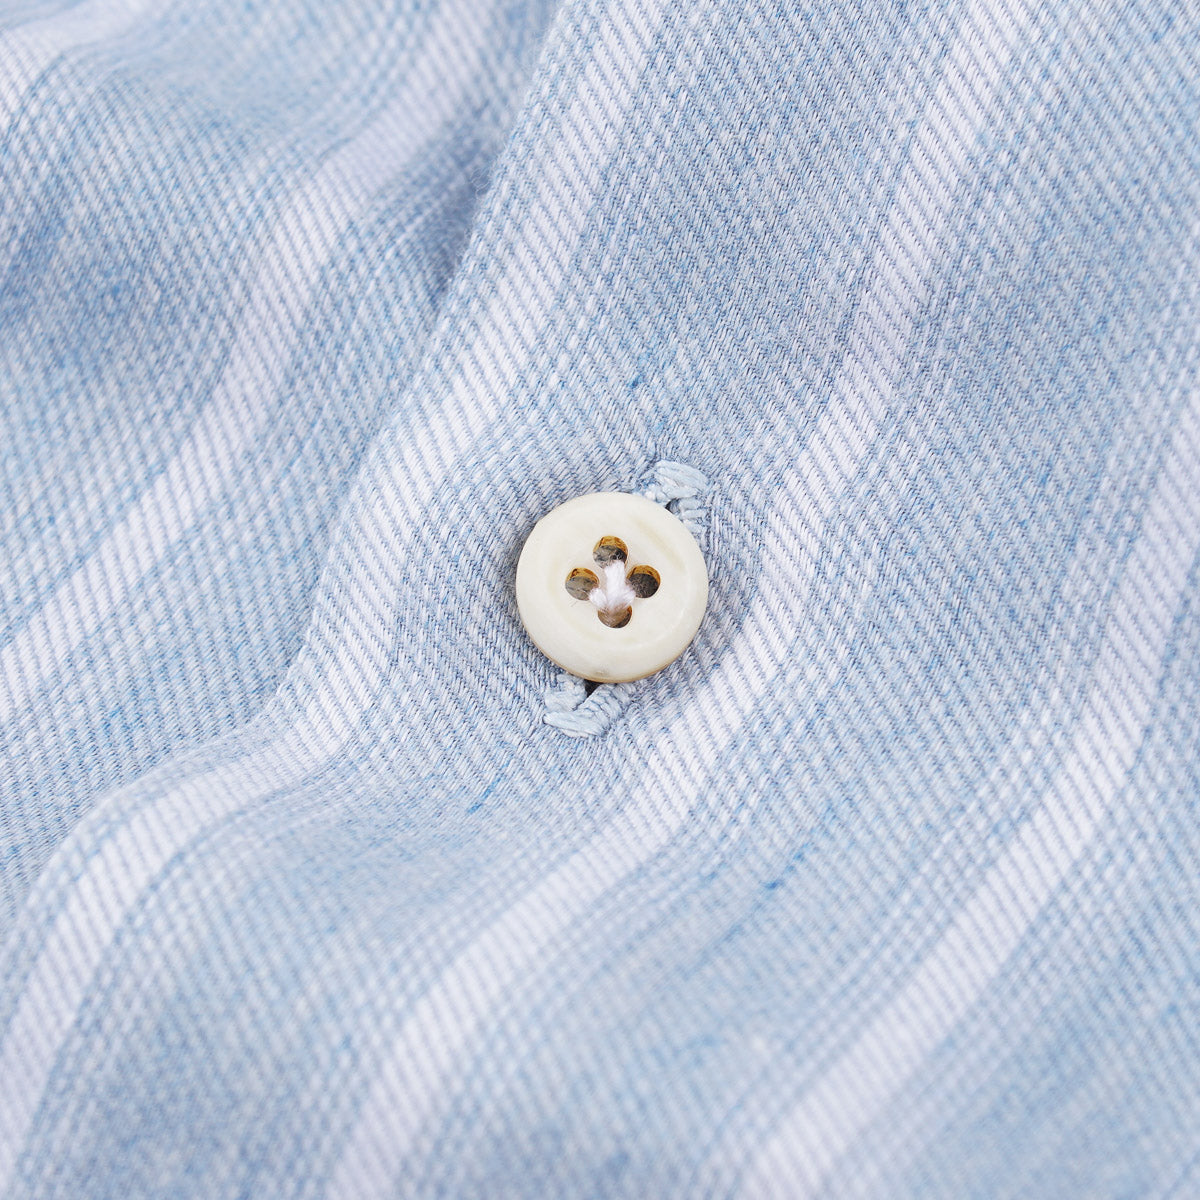 Finamore Soft Cashmere and Cotton Shirt - Top Shelf Apparel